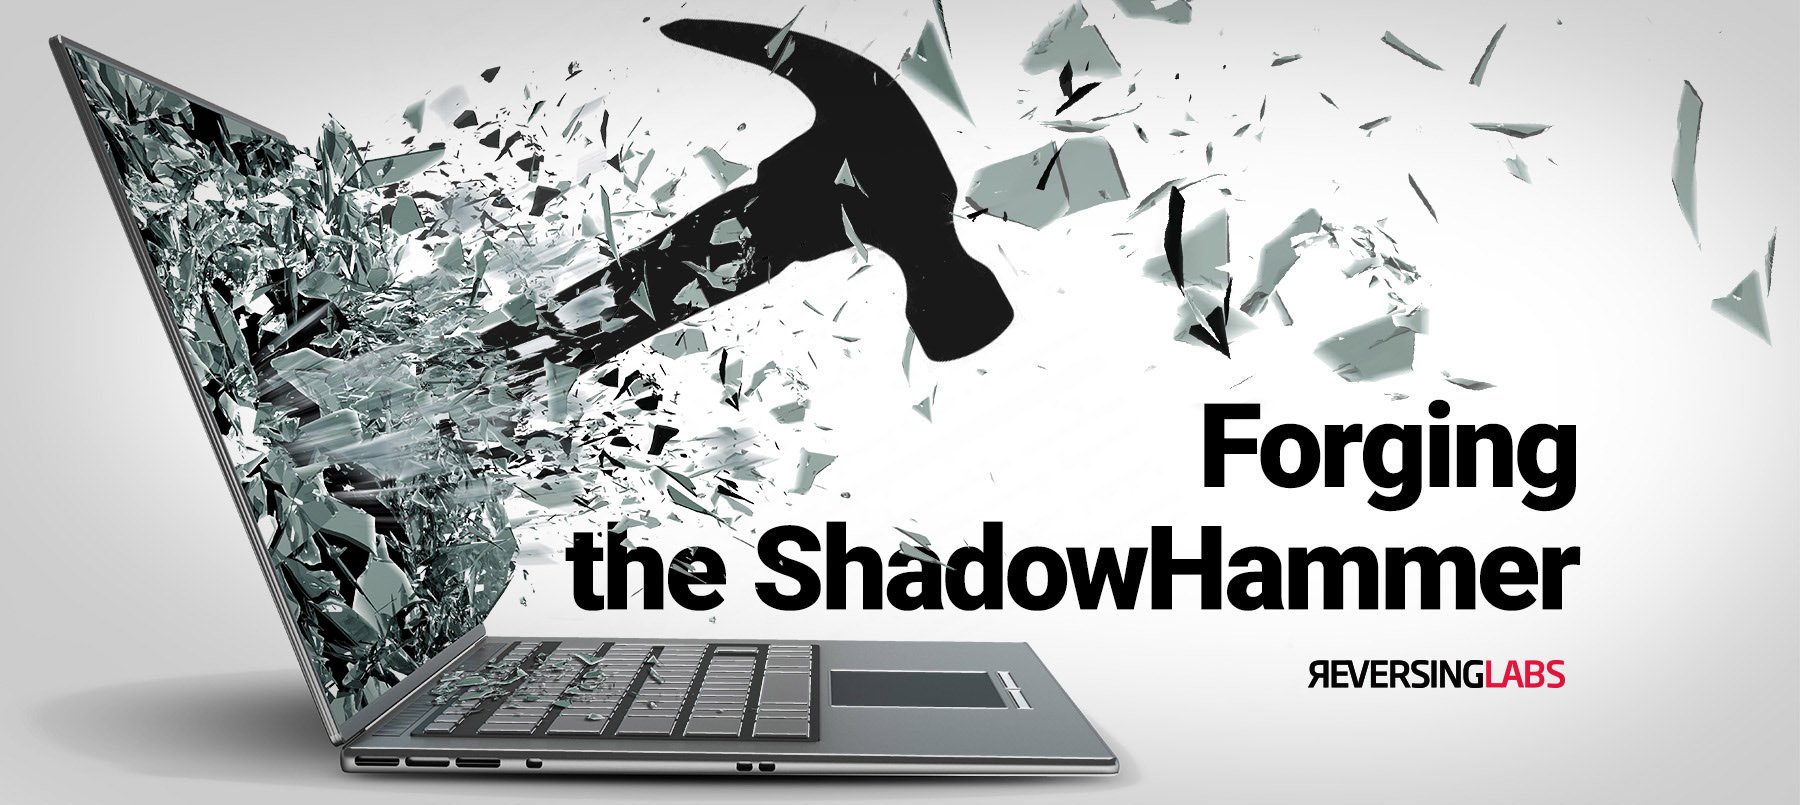 forging_the_shadowhammer-1